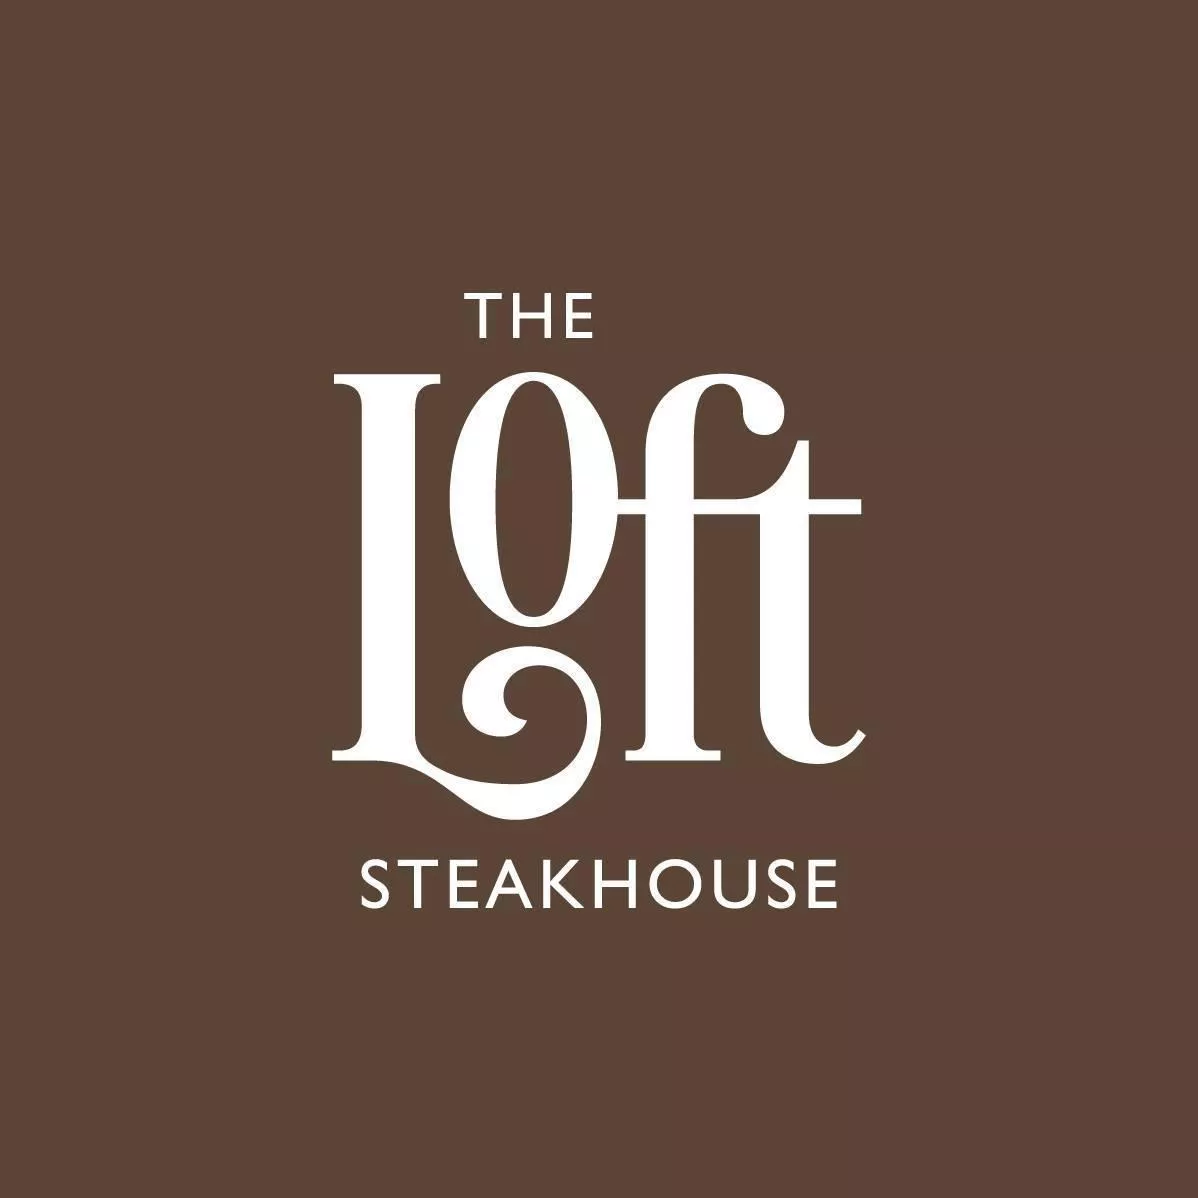 The Loft Steakhouse Brooklyn